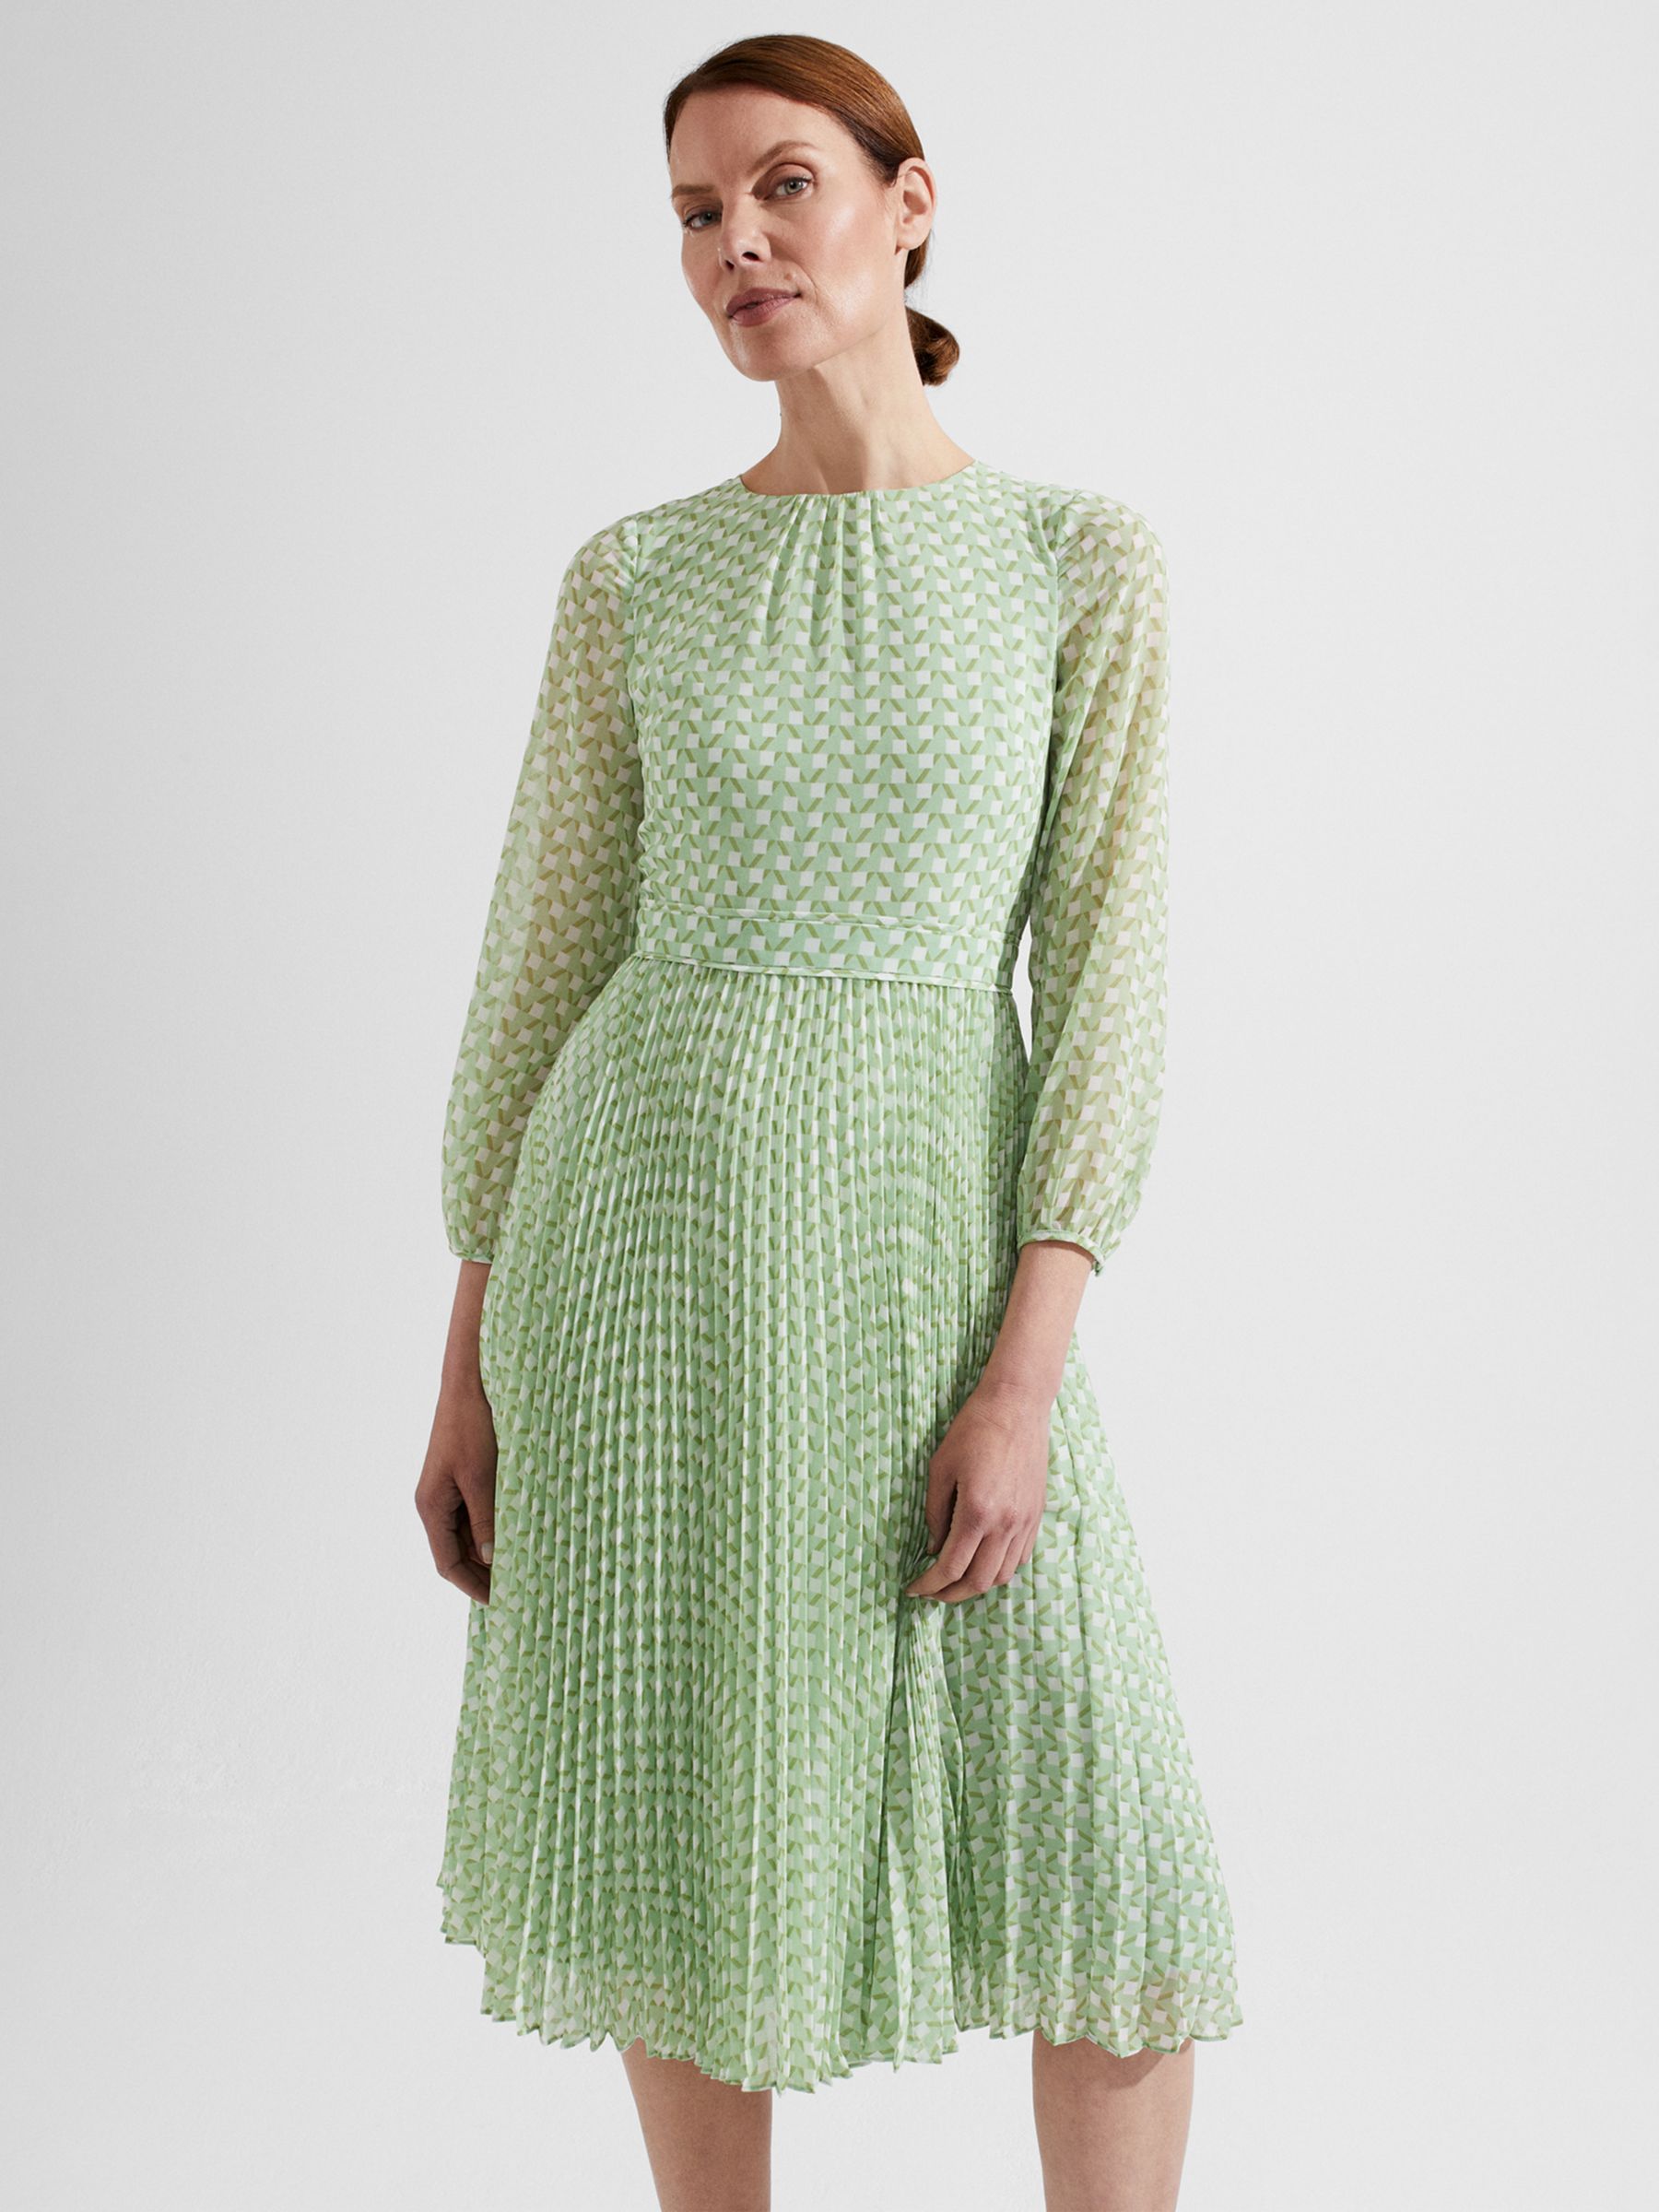 Hobbs Salma Geometric Print Pleated Dress, Green/Multi, 14